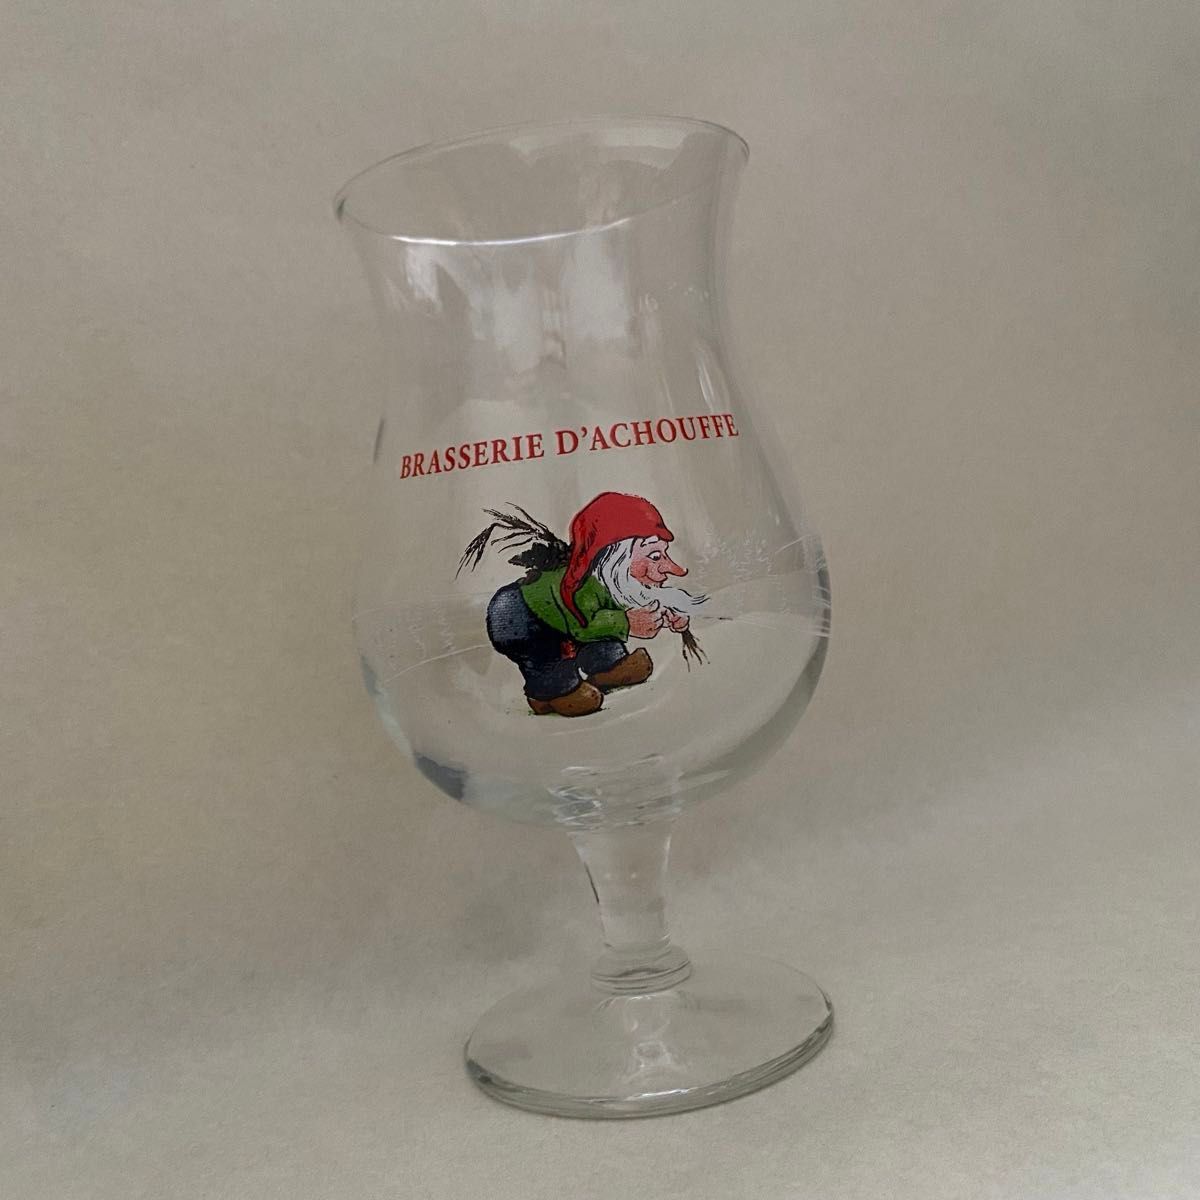 【Achouffe】シュフ グラス Achouffe glass ベルギービール 妖精